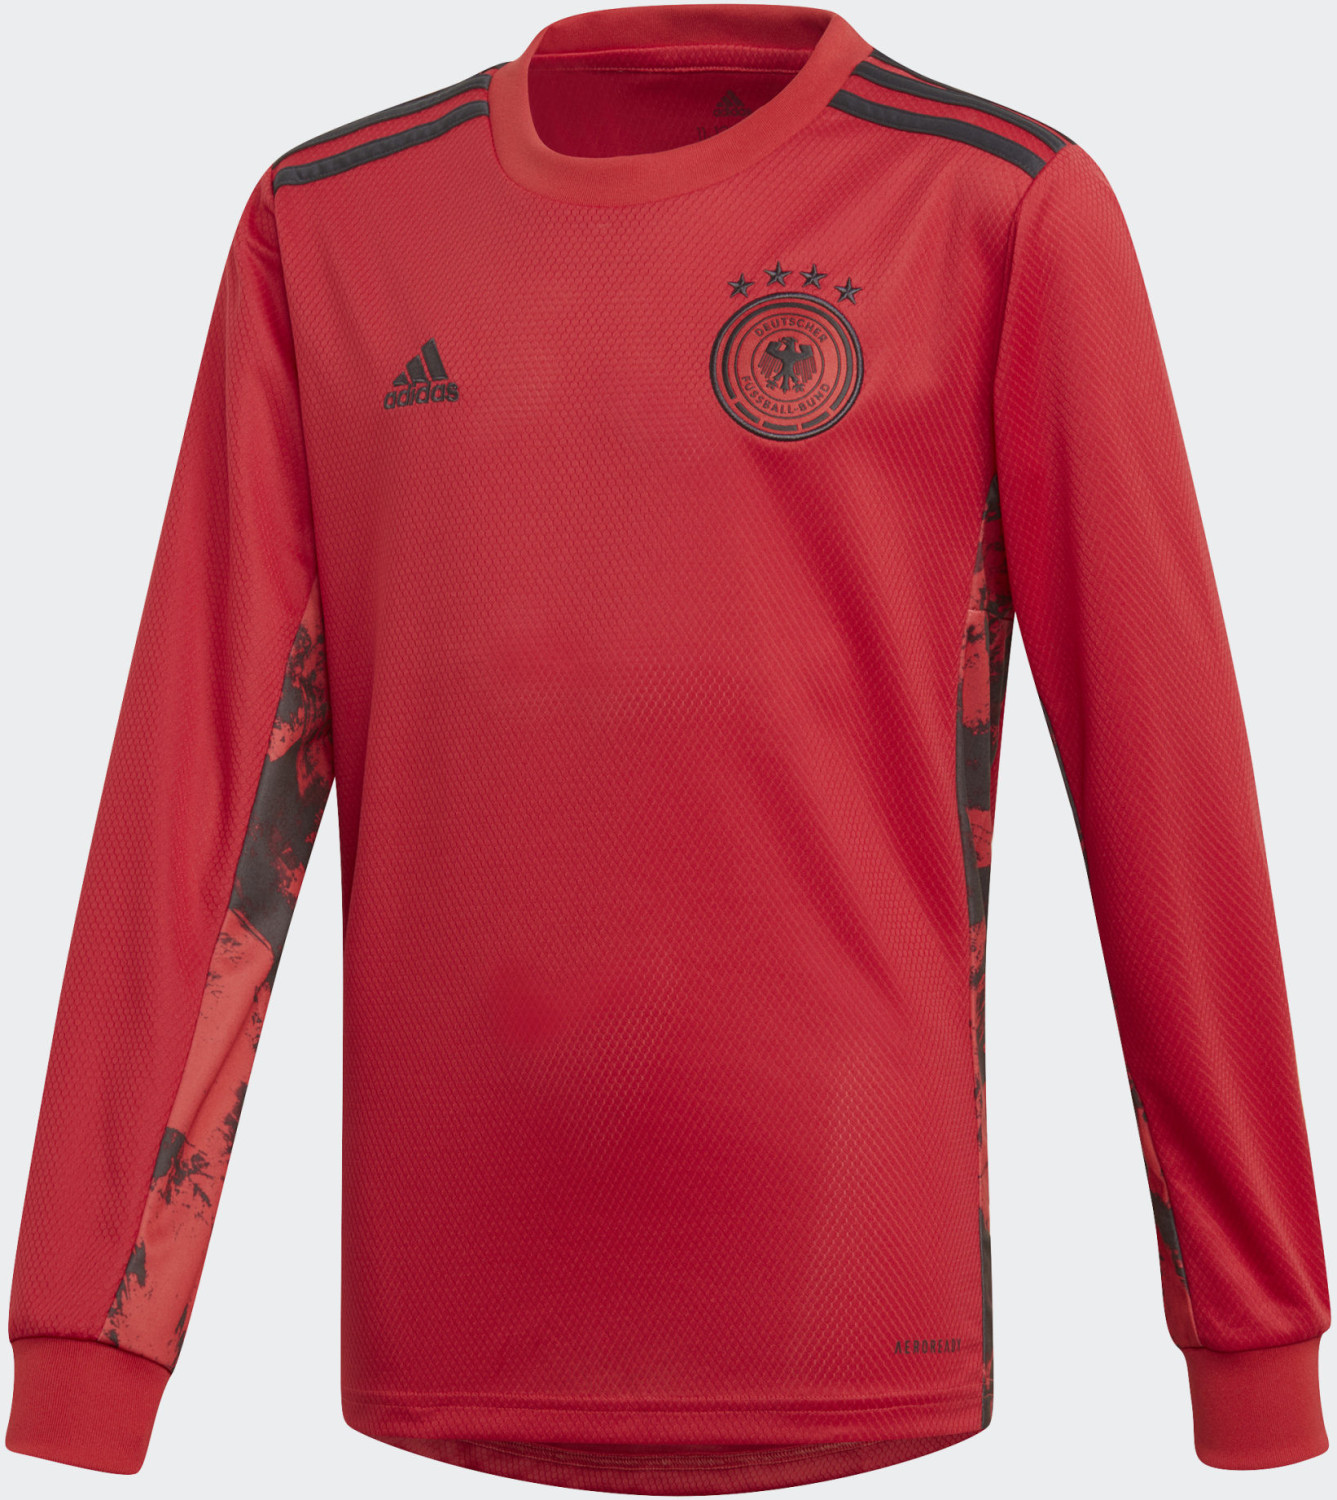 Adidas Germany Home Goalkeeper Shirt 2020 Youth